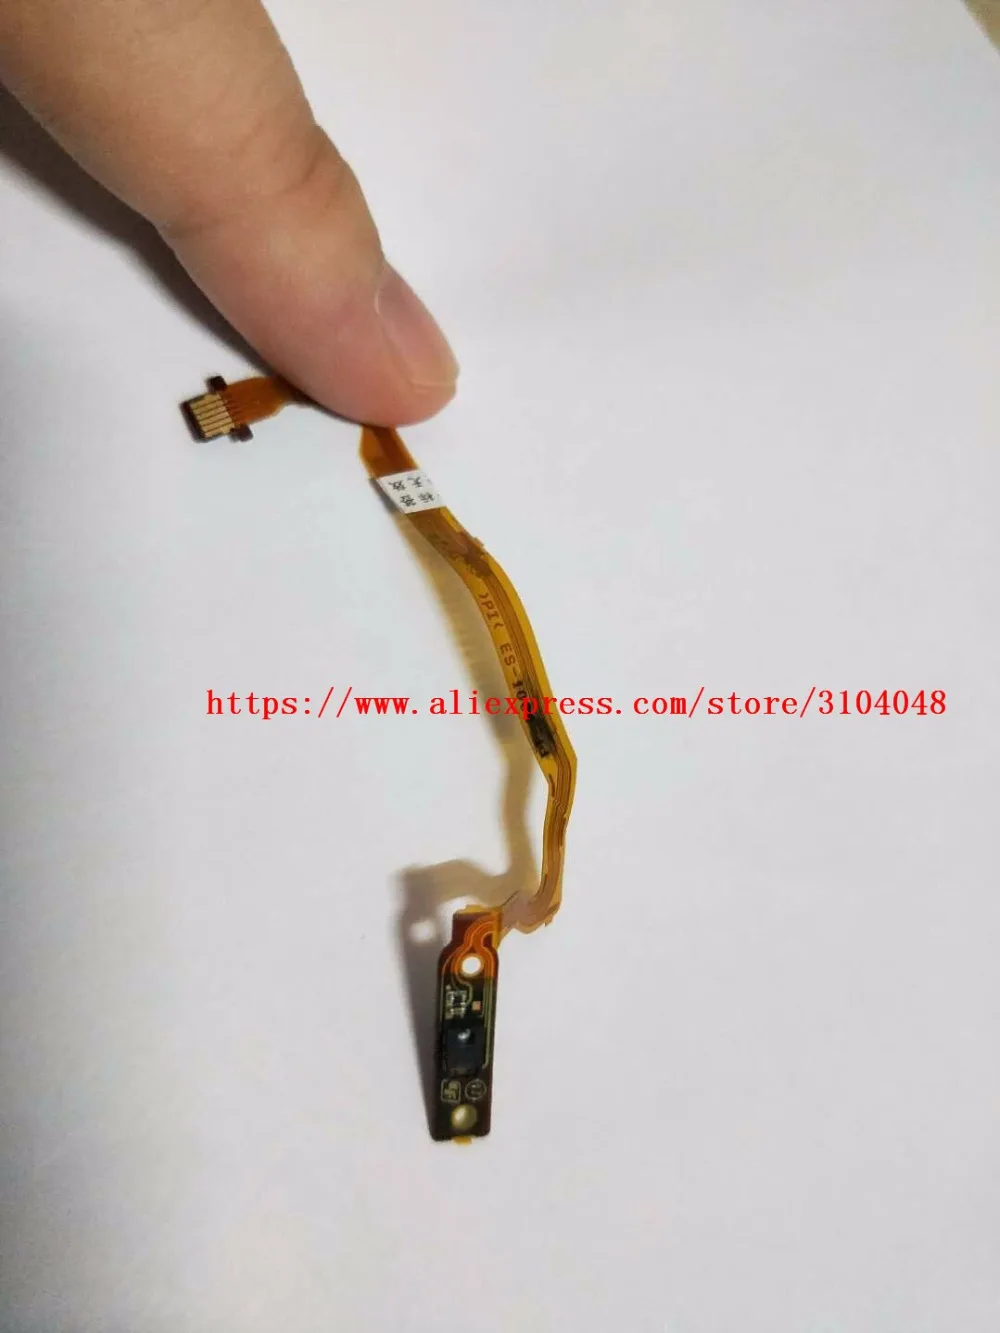 

Viewfinder eyepiece control flex cable assembly for Sony ILCE-7 ILCE-7r ILCE-7s A7 A7s A7r A7k camera